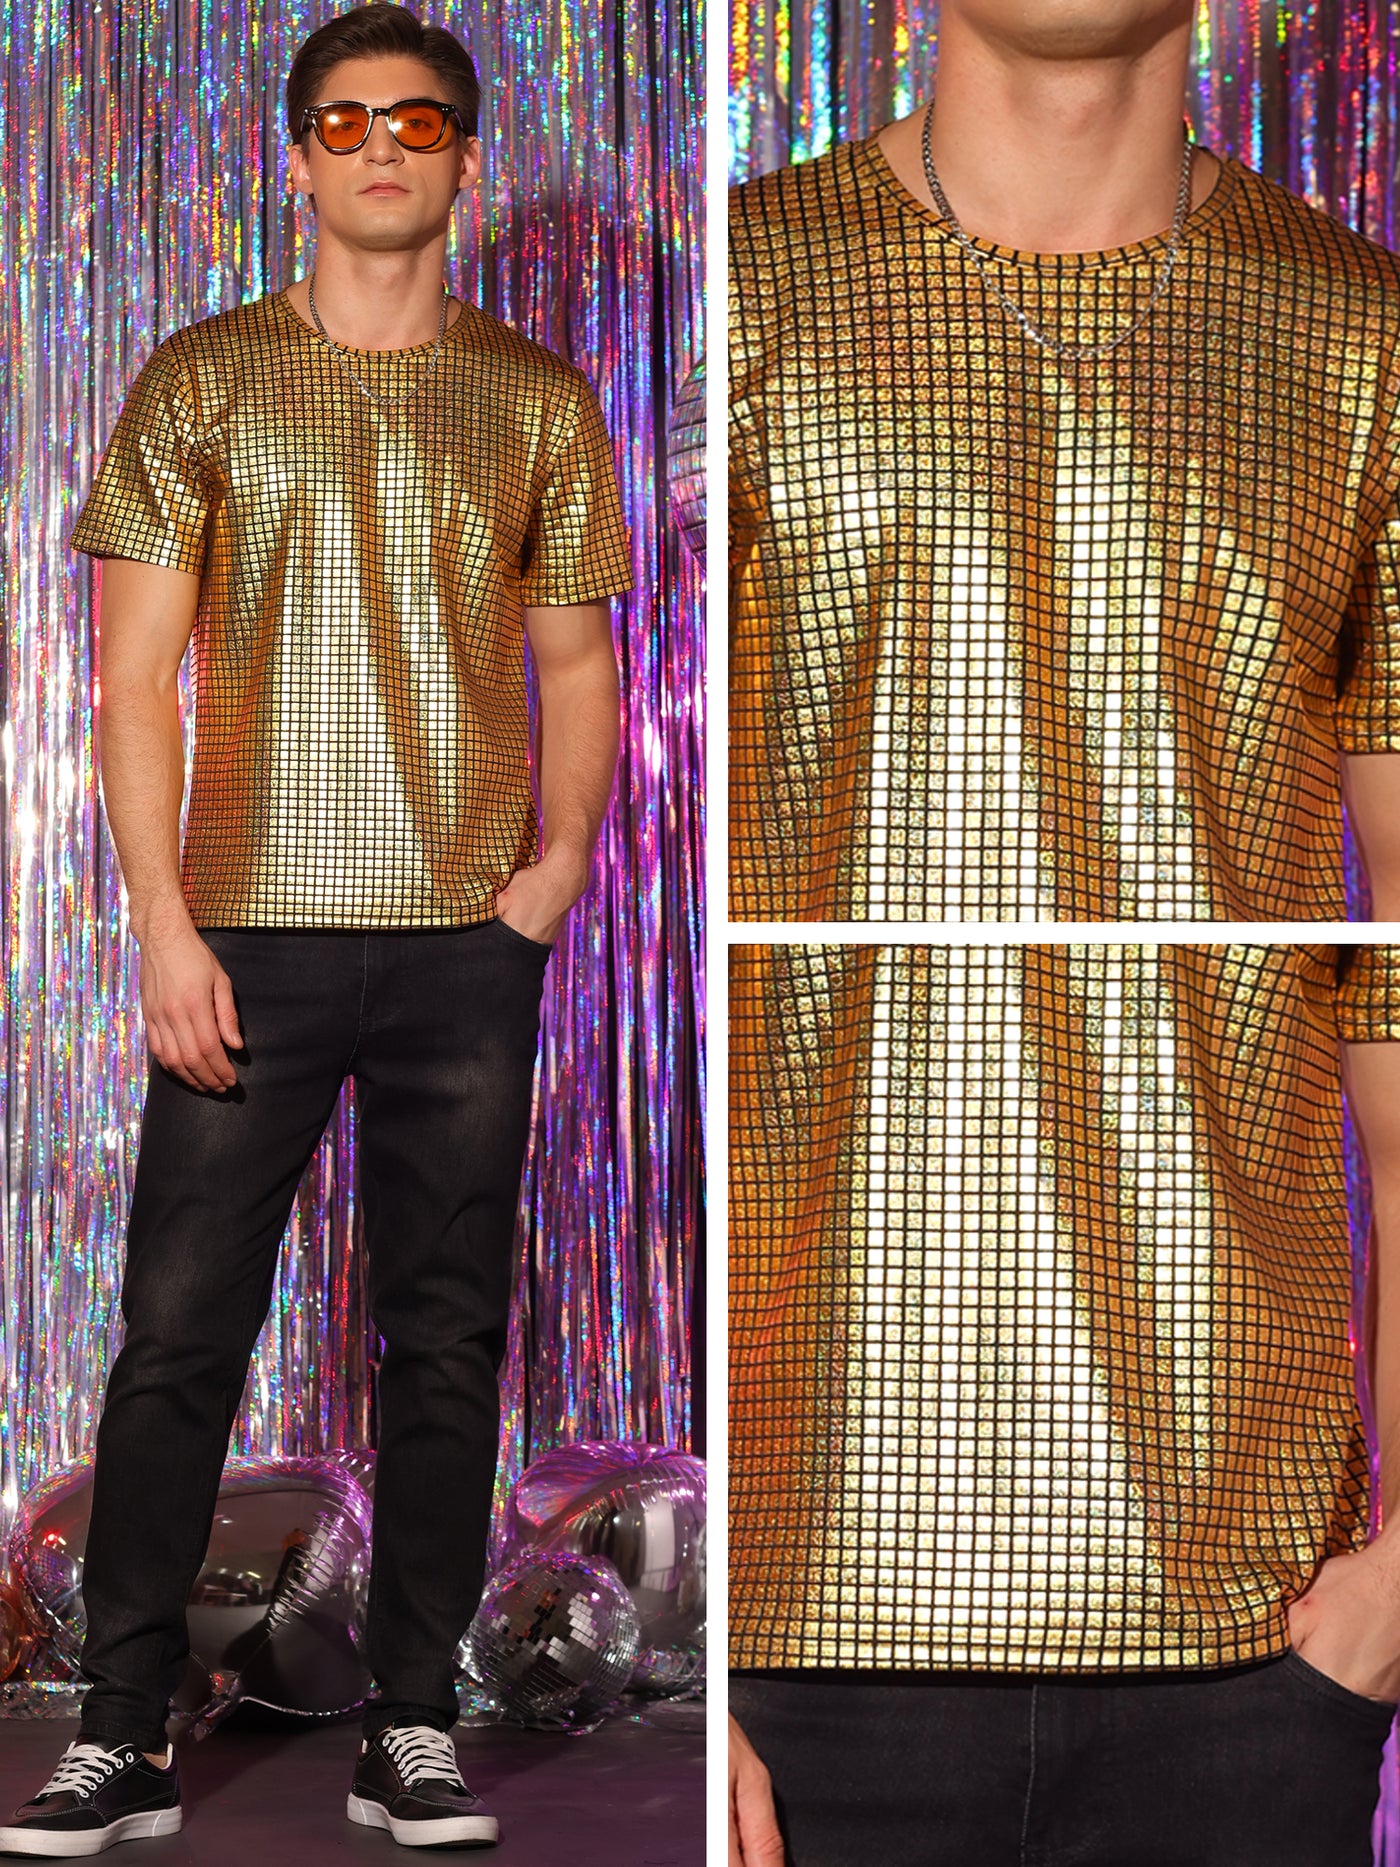 Bublédon Men's Sparkle Round Neck Short Sleeves Nightclub Party Metallic Tee T-Shirt